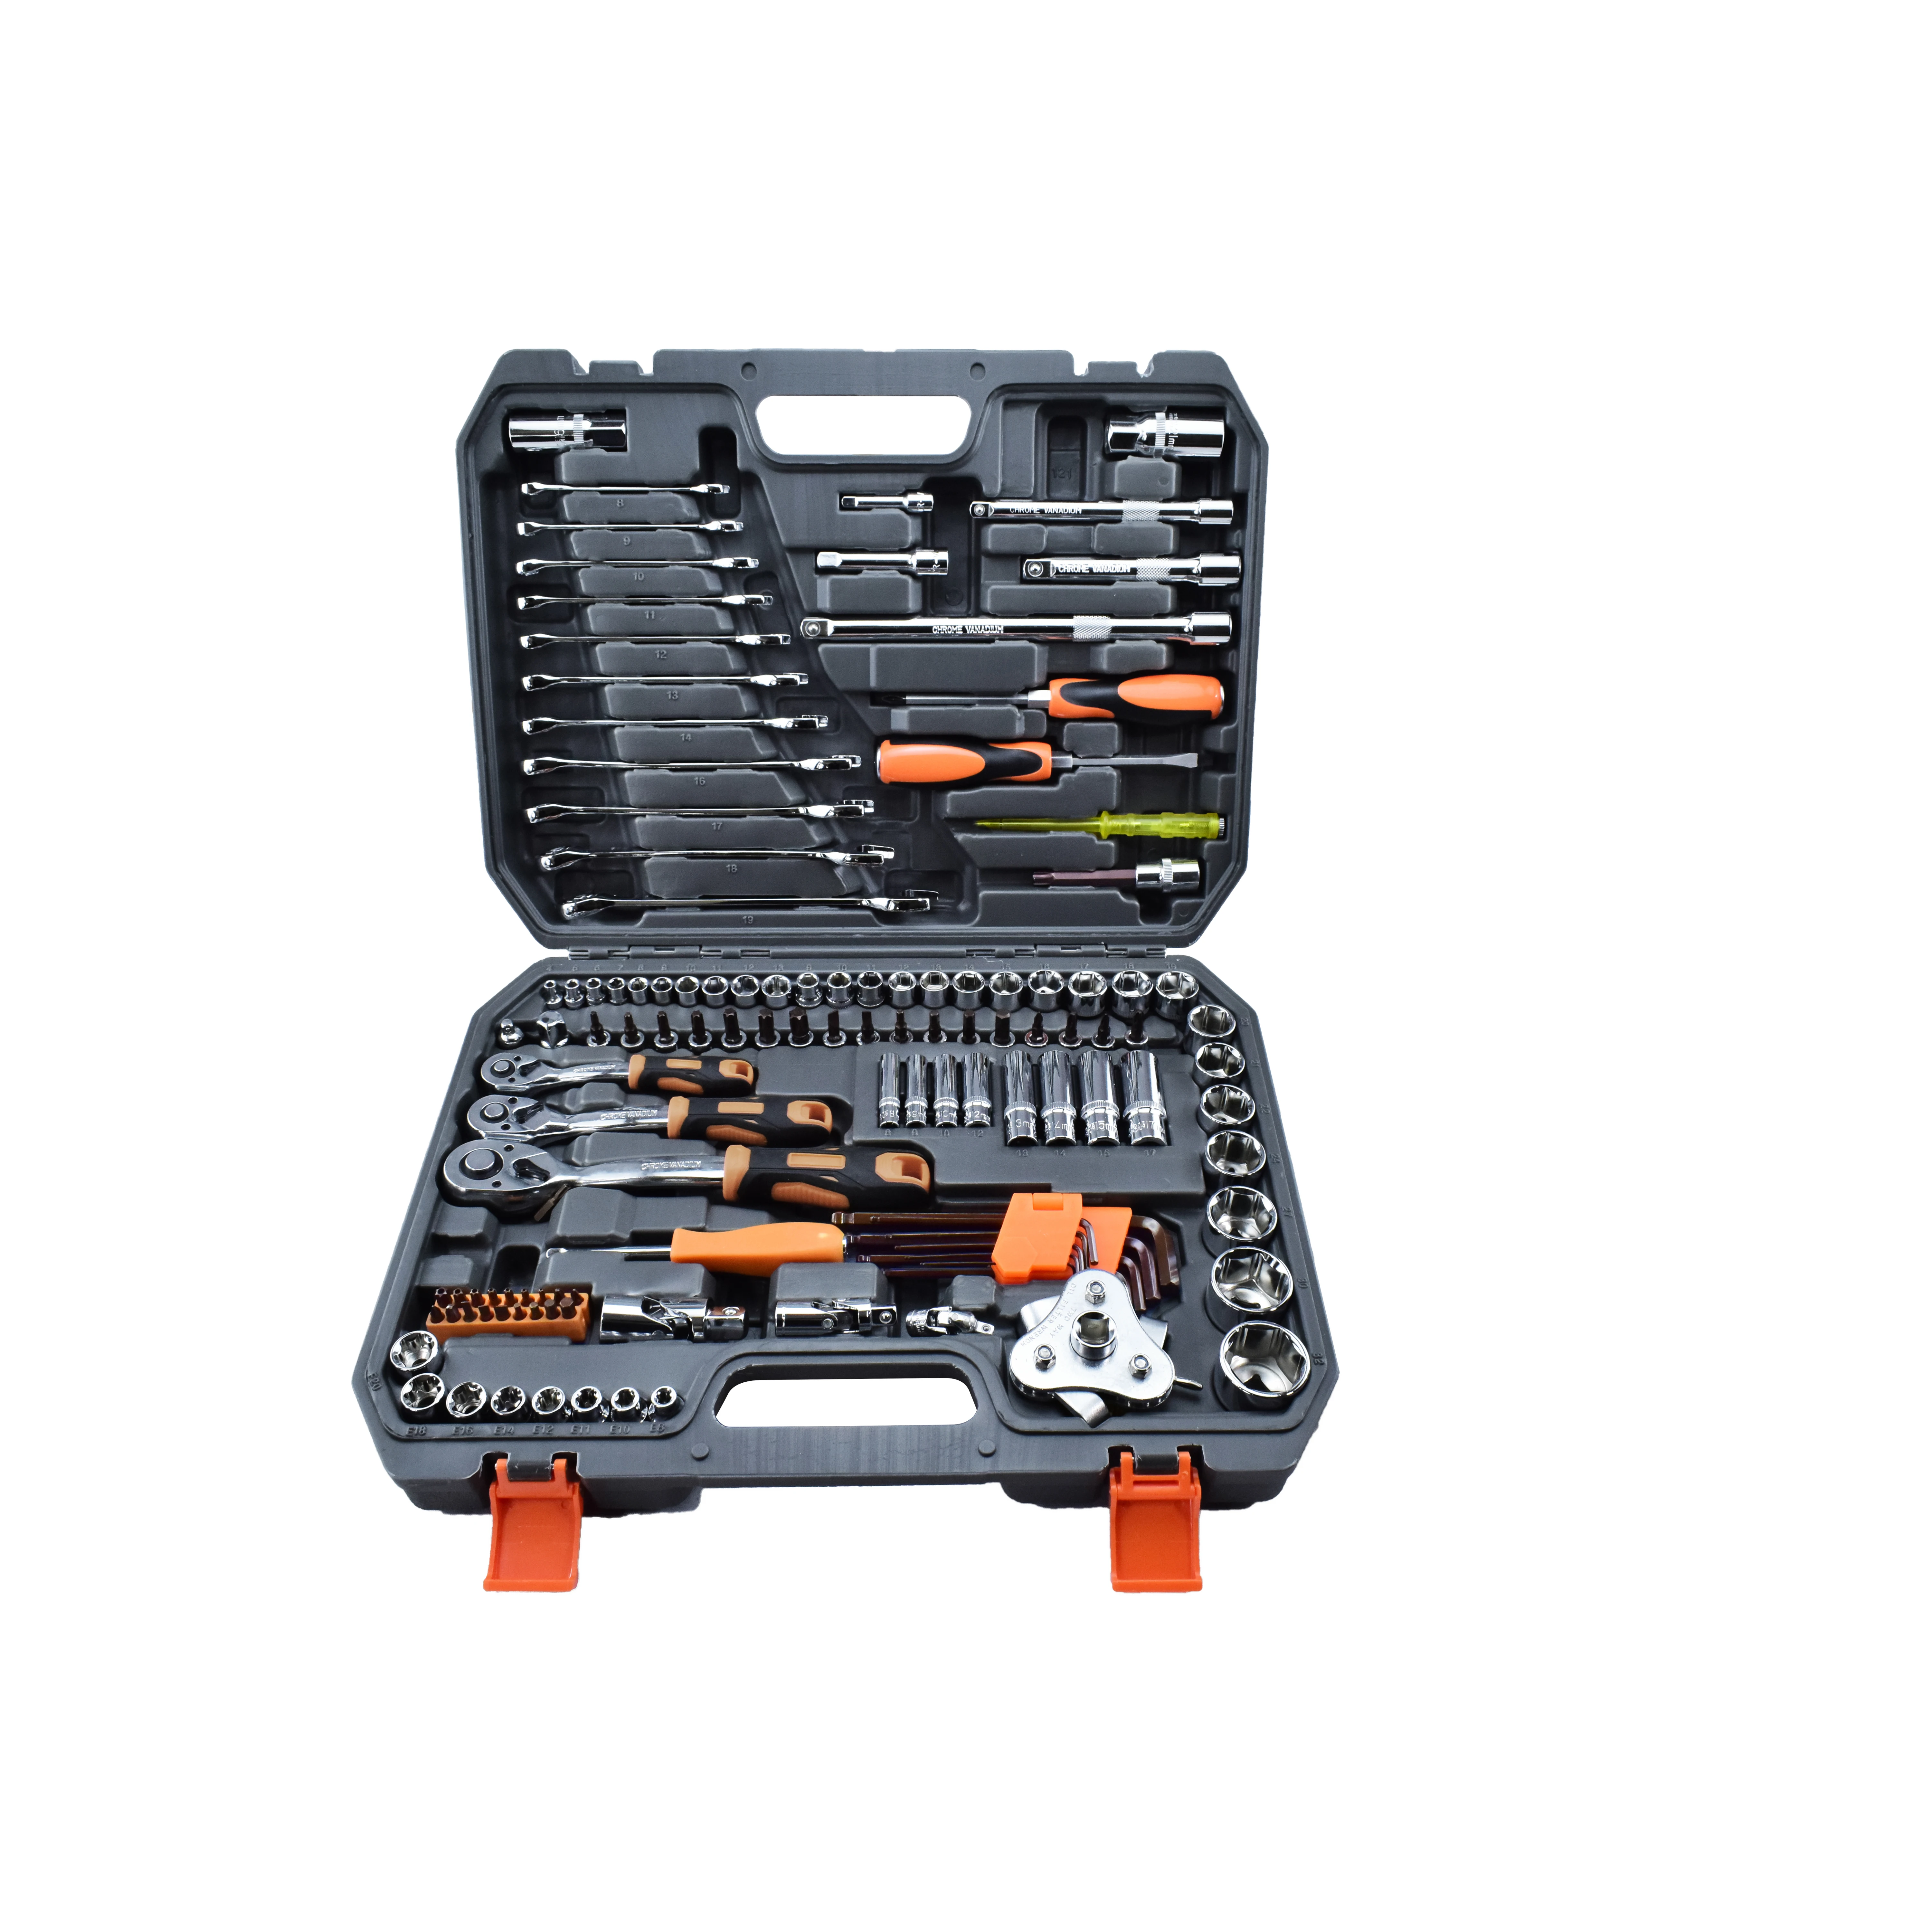 

SOLUDE hot sale 121 pcs 1/2", 1/4", 3/8" 50BV30 ratchet sockets tools set for repairing